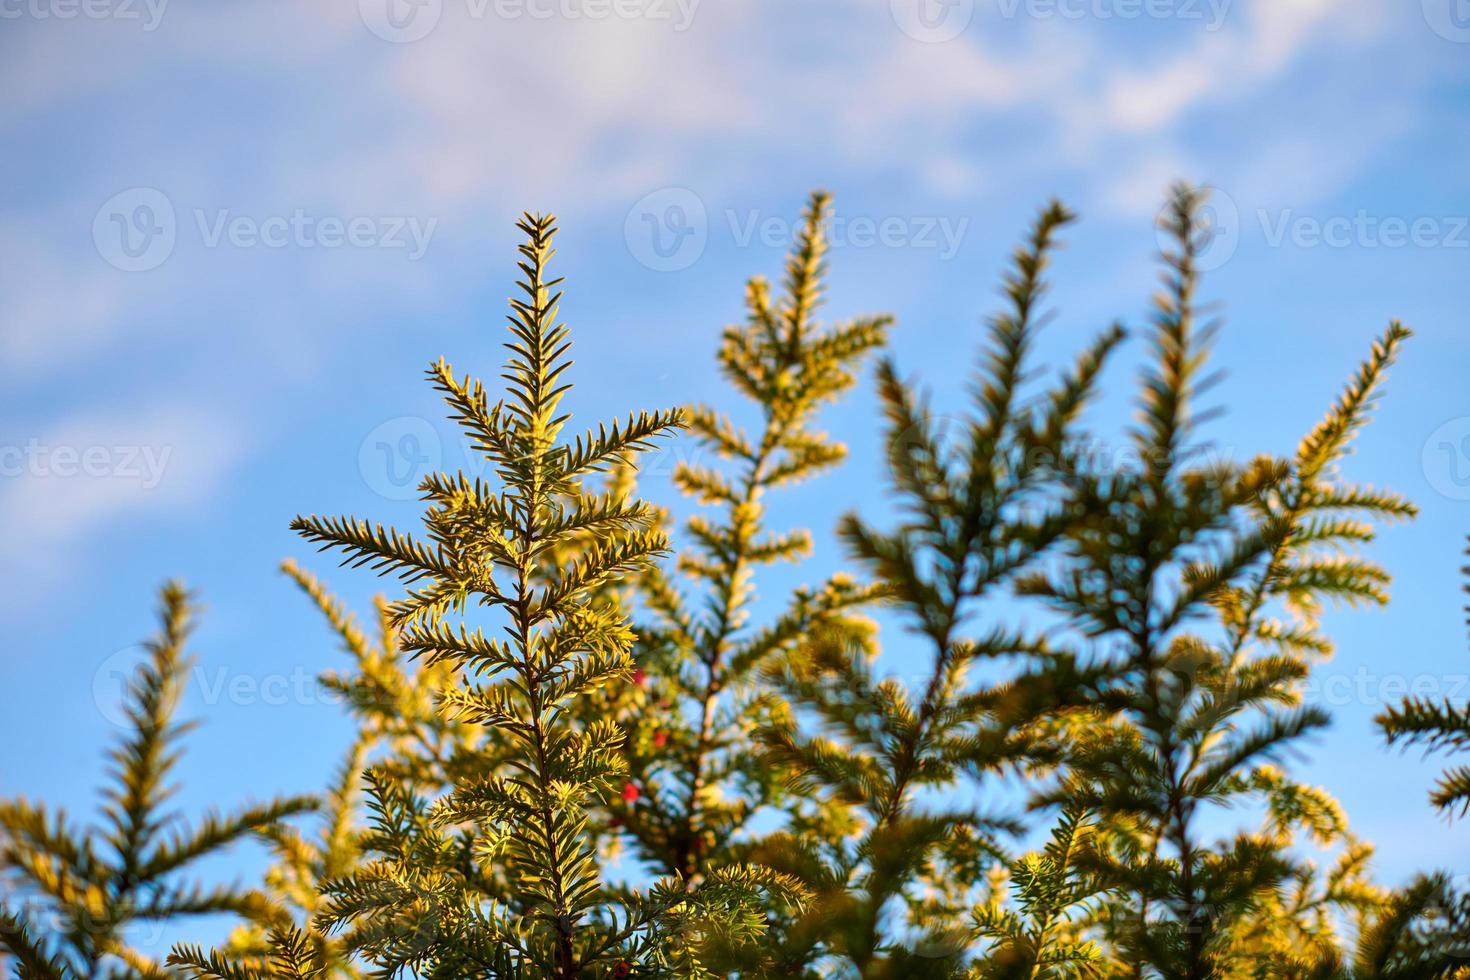 idegran taxus baccata gren kopia utrymme, blå himmel bakgrund, barrträd vintergrön idegran foto